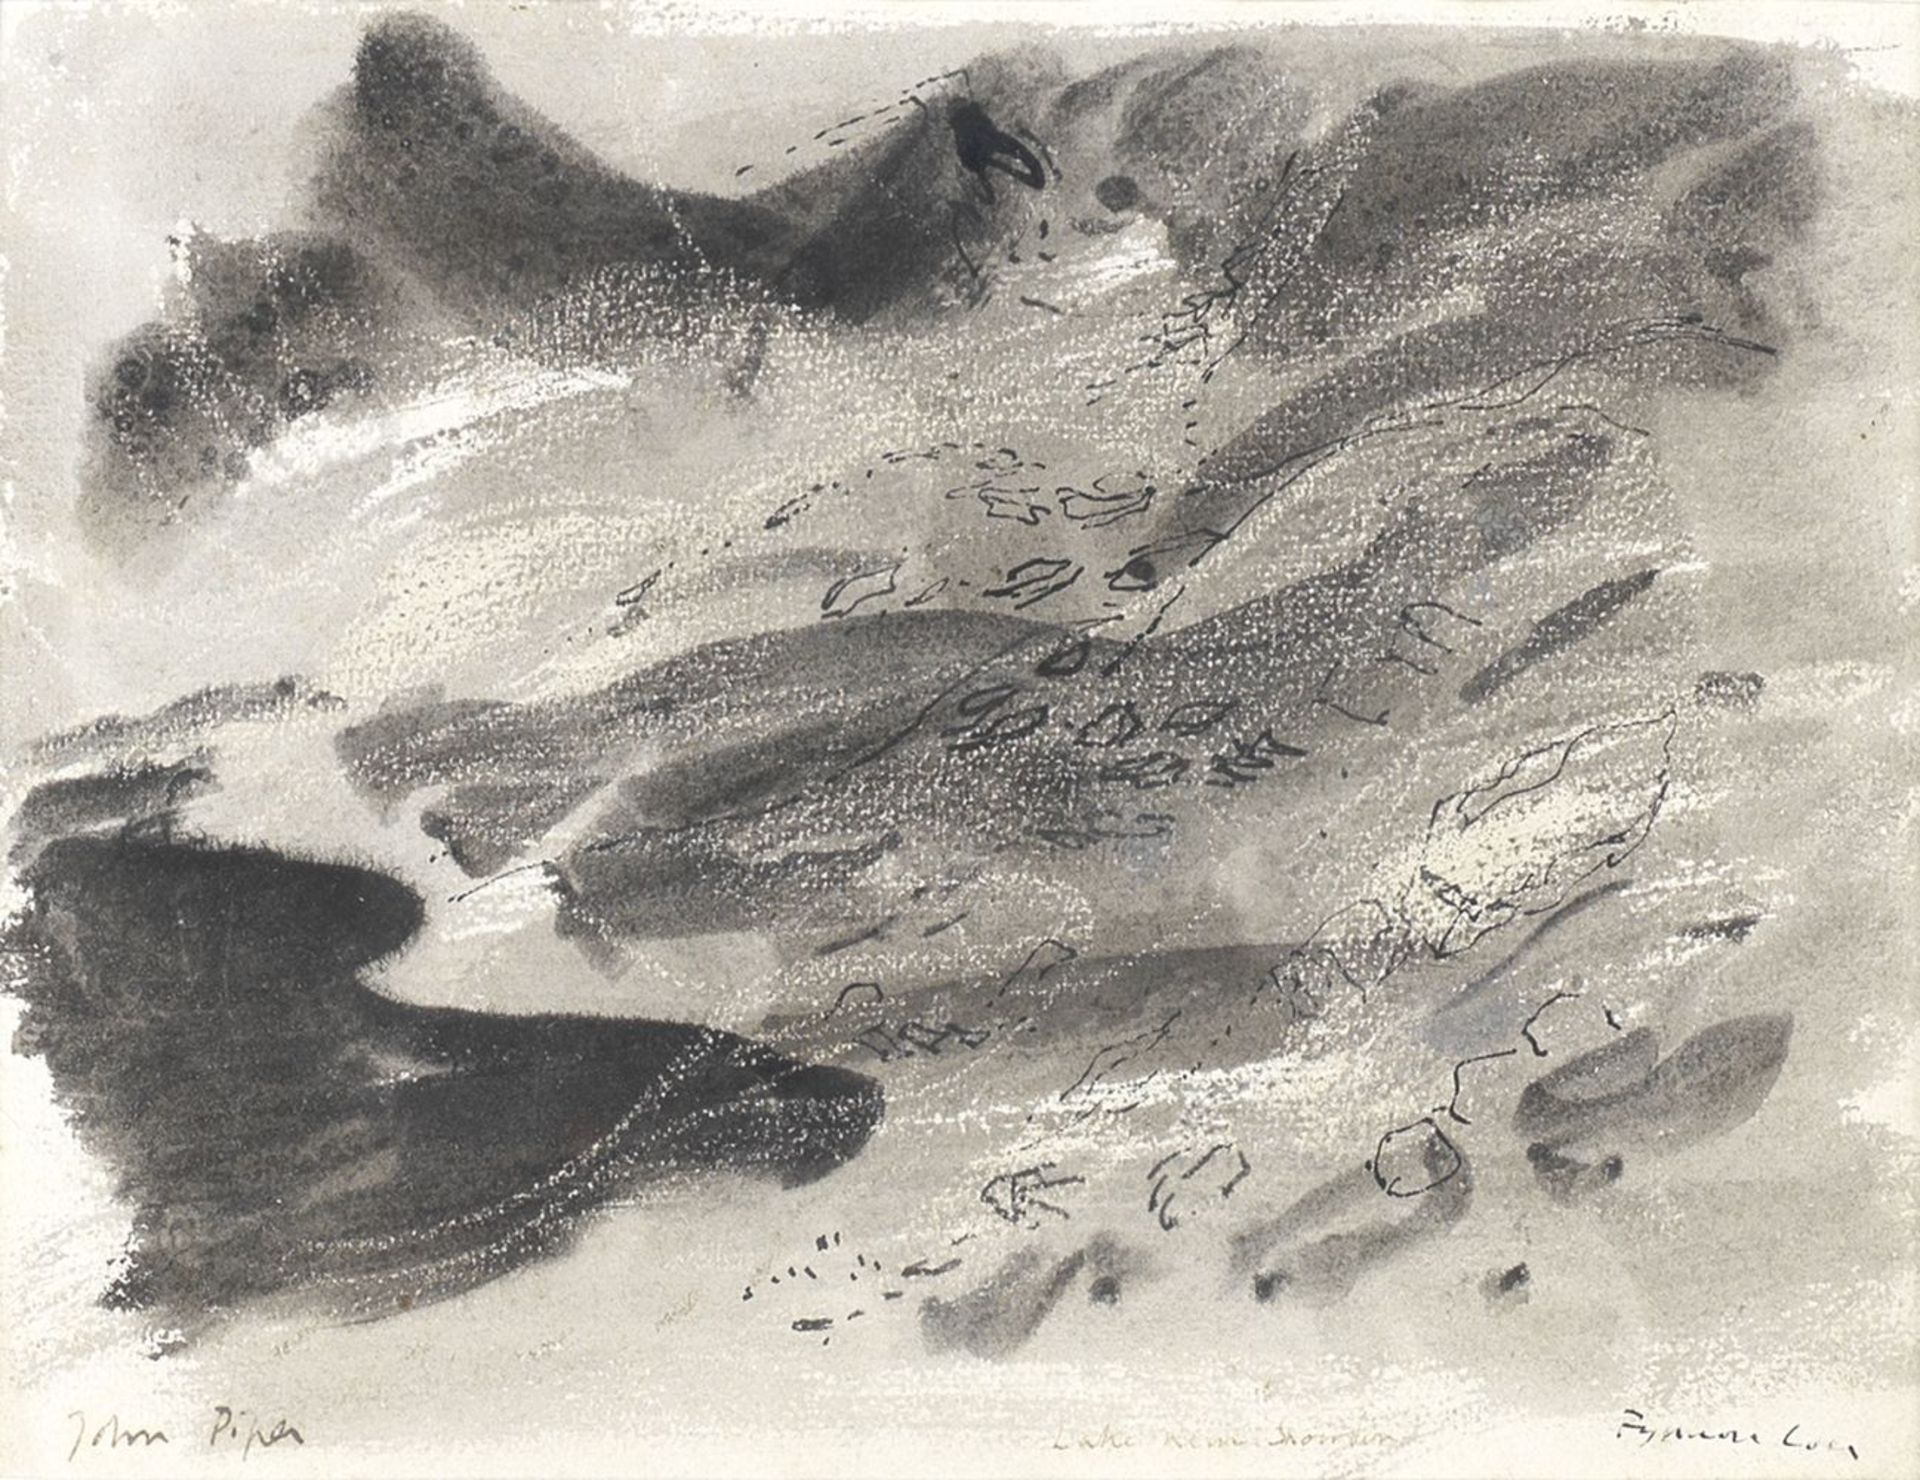 John Piper, Lake Near Snowdon c.1950, ink, wash and crayon 19 x 26cm